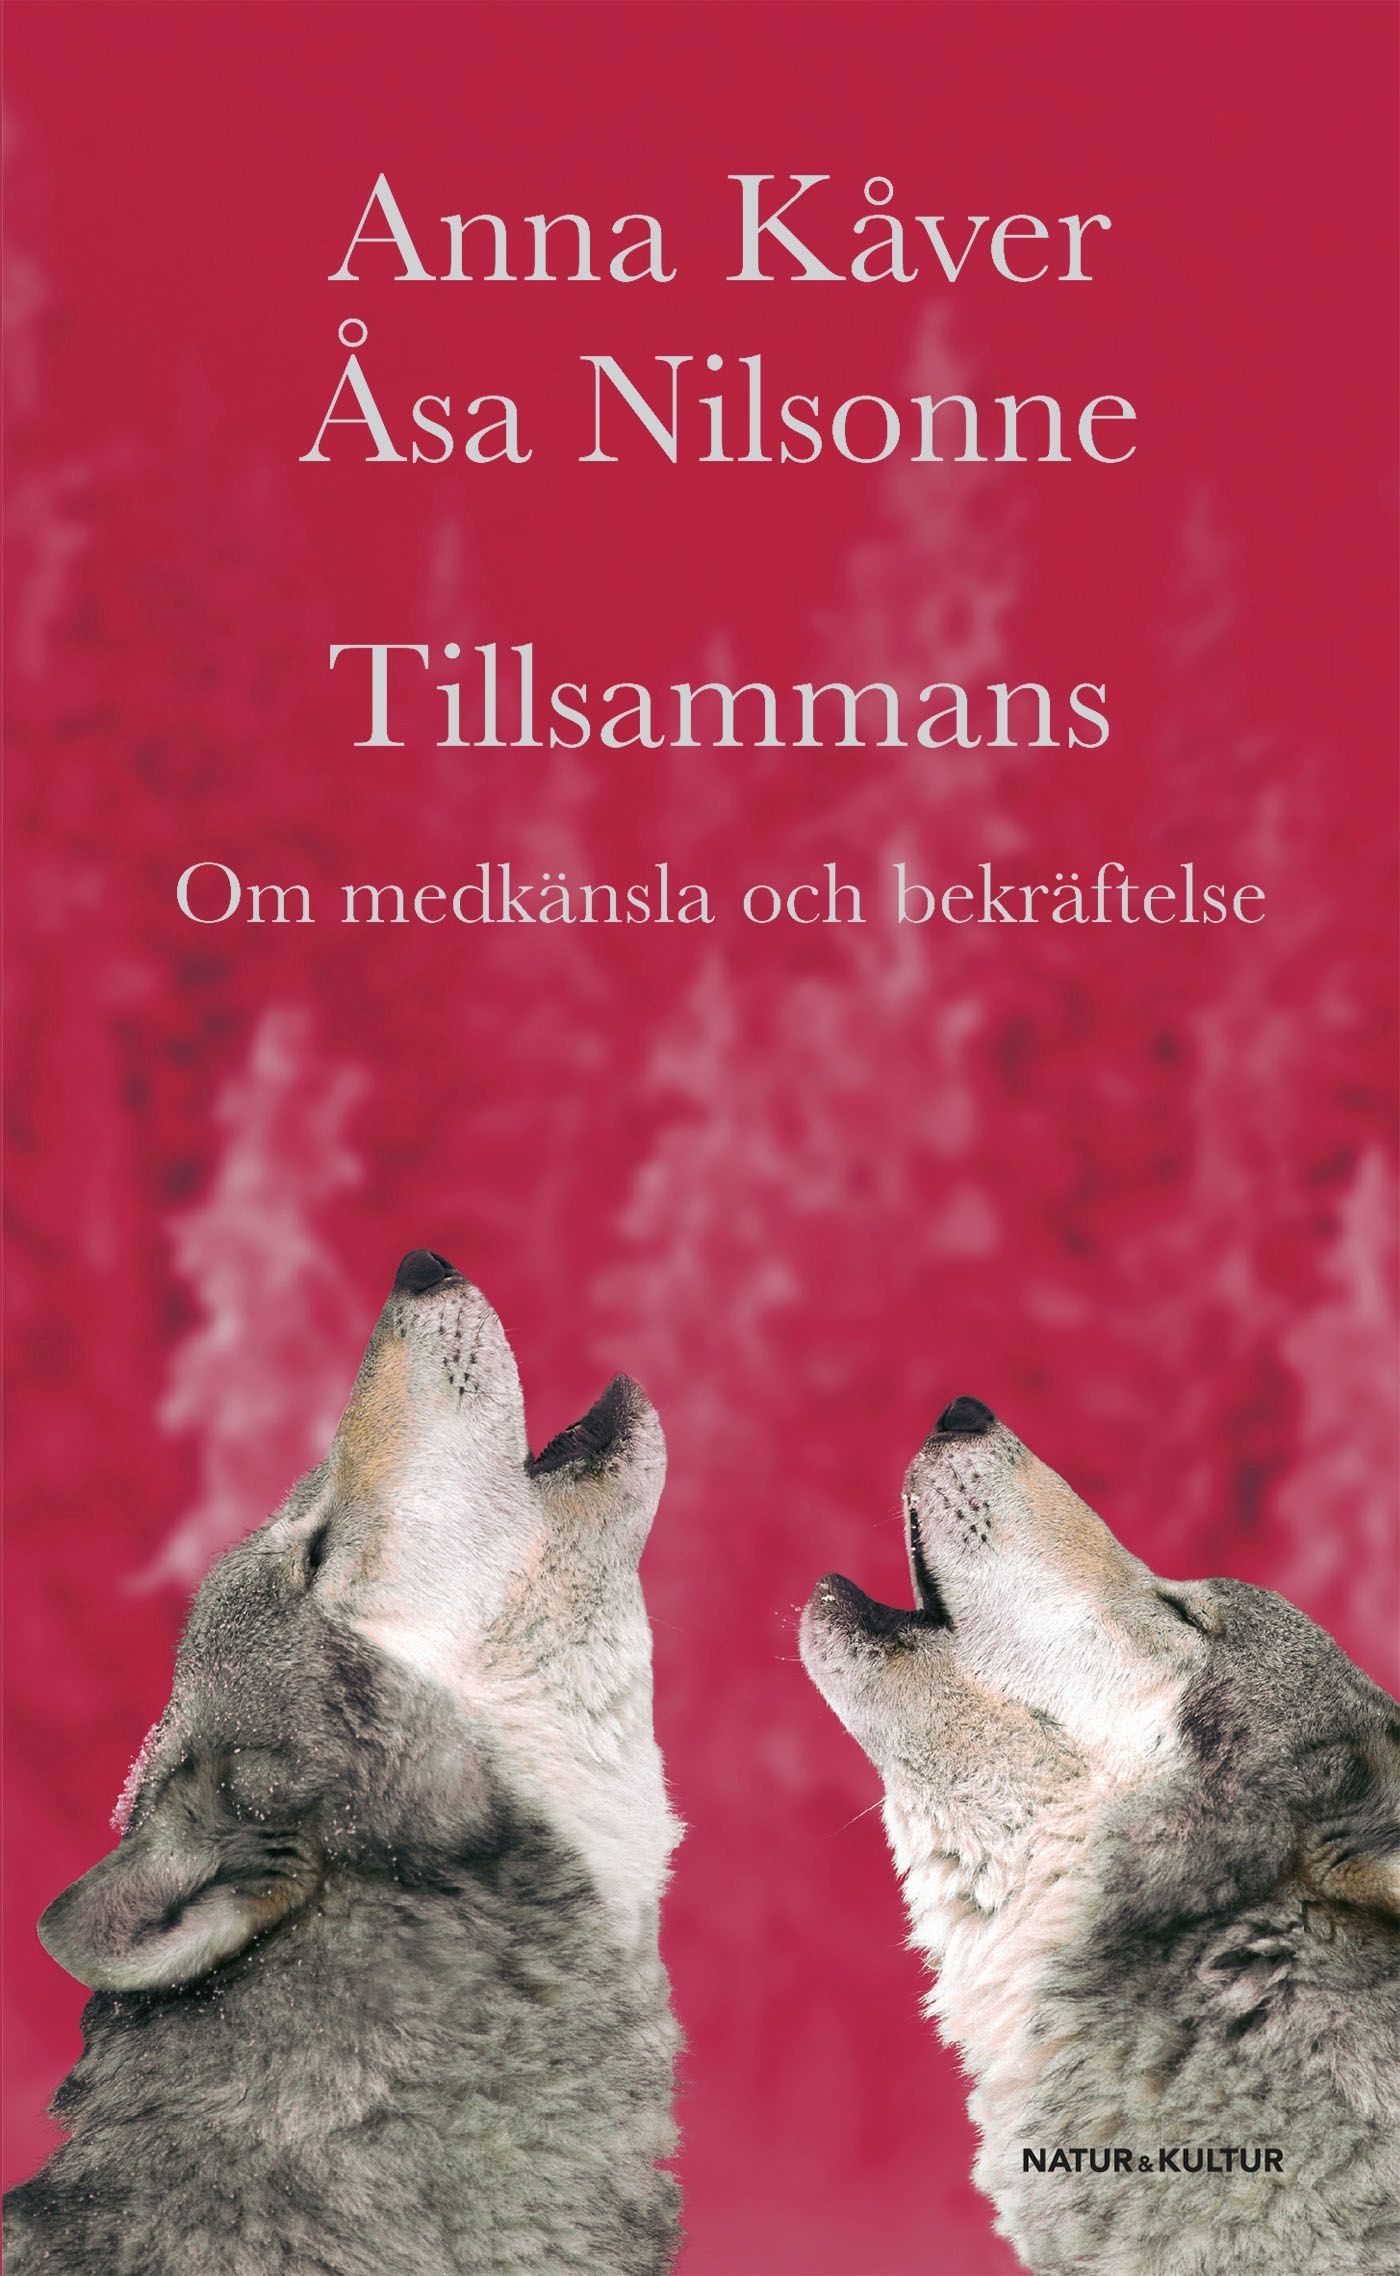 Tillsammans, e-bog af Anna Kåver, Åsa Nilsonne